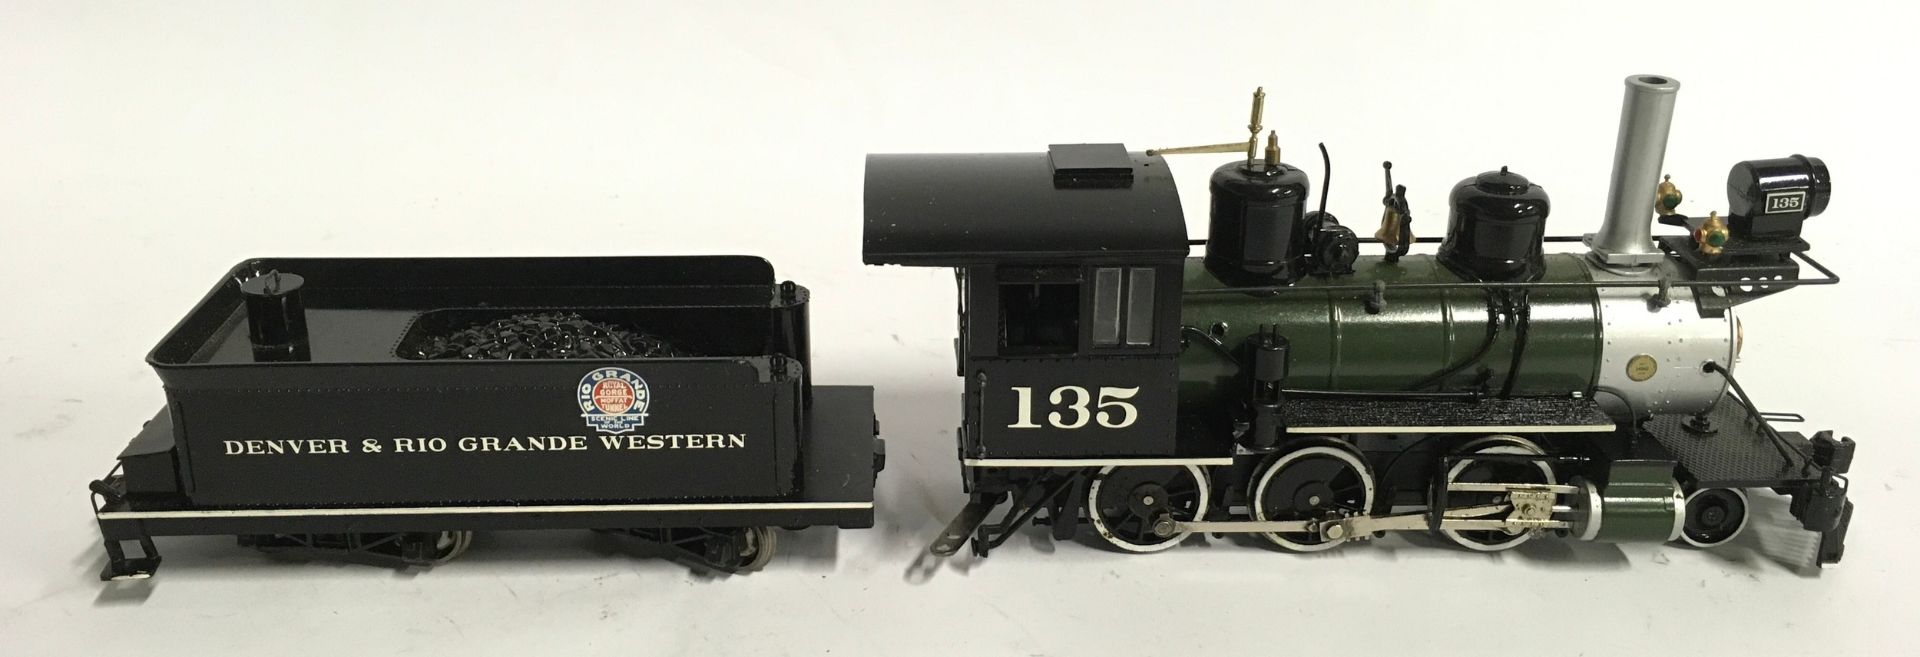 Bachmann Spectrum On30 2-6-0 Steam locomotive, Denver & Rio Grande Western #135. Appears Excellent - Image 3 of 3